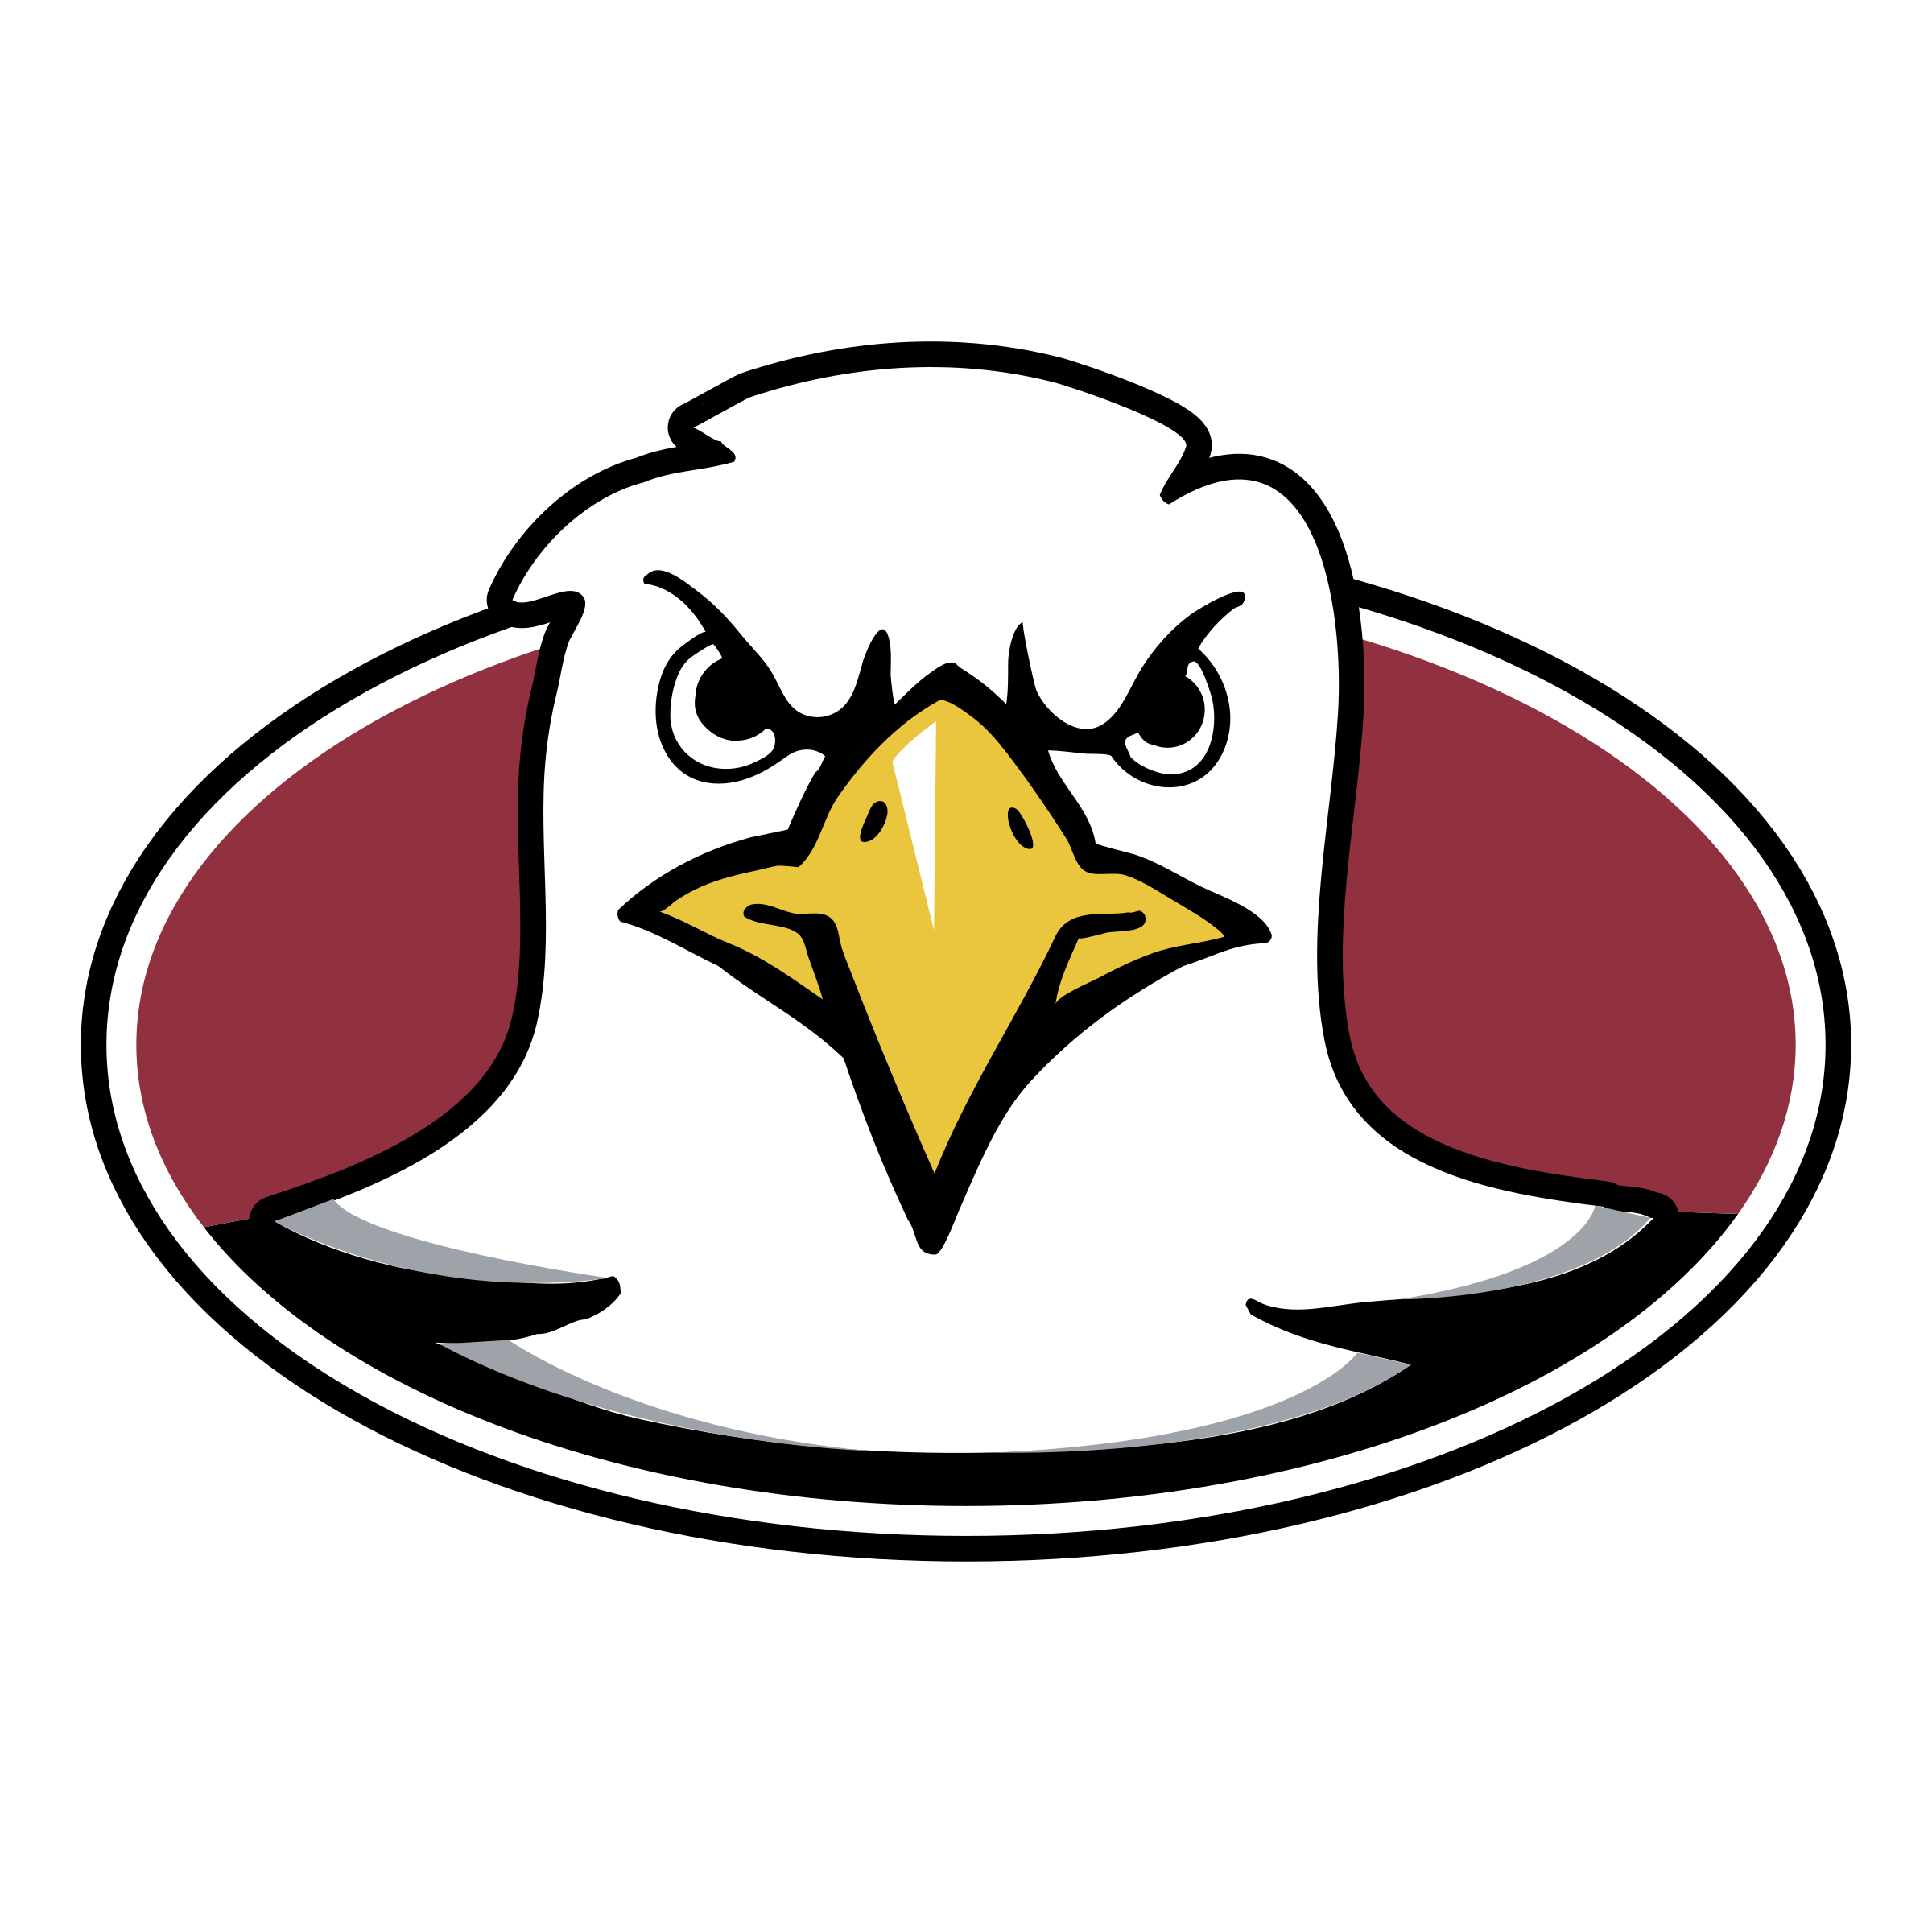 Boston College Logo - Boston College Eagles 05 Logo PNG Transparent & SVG Vector - Freebie ...